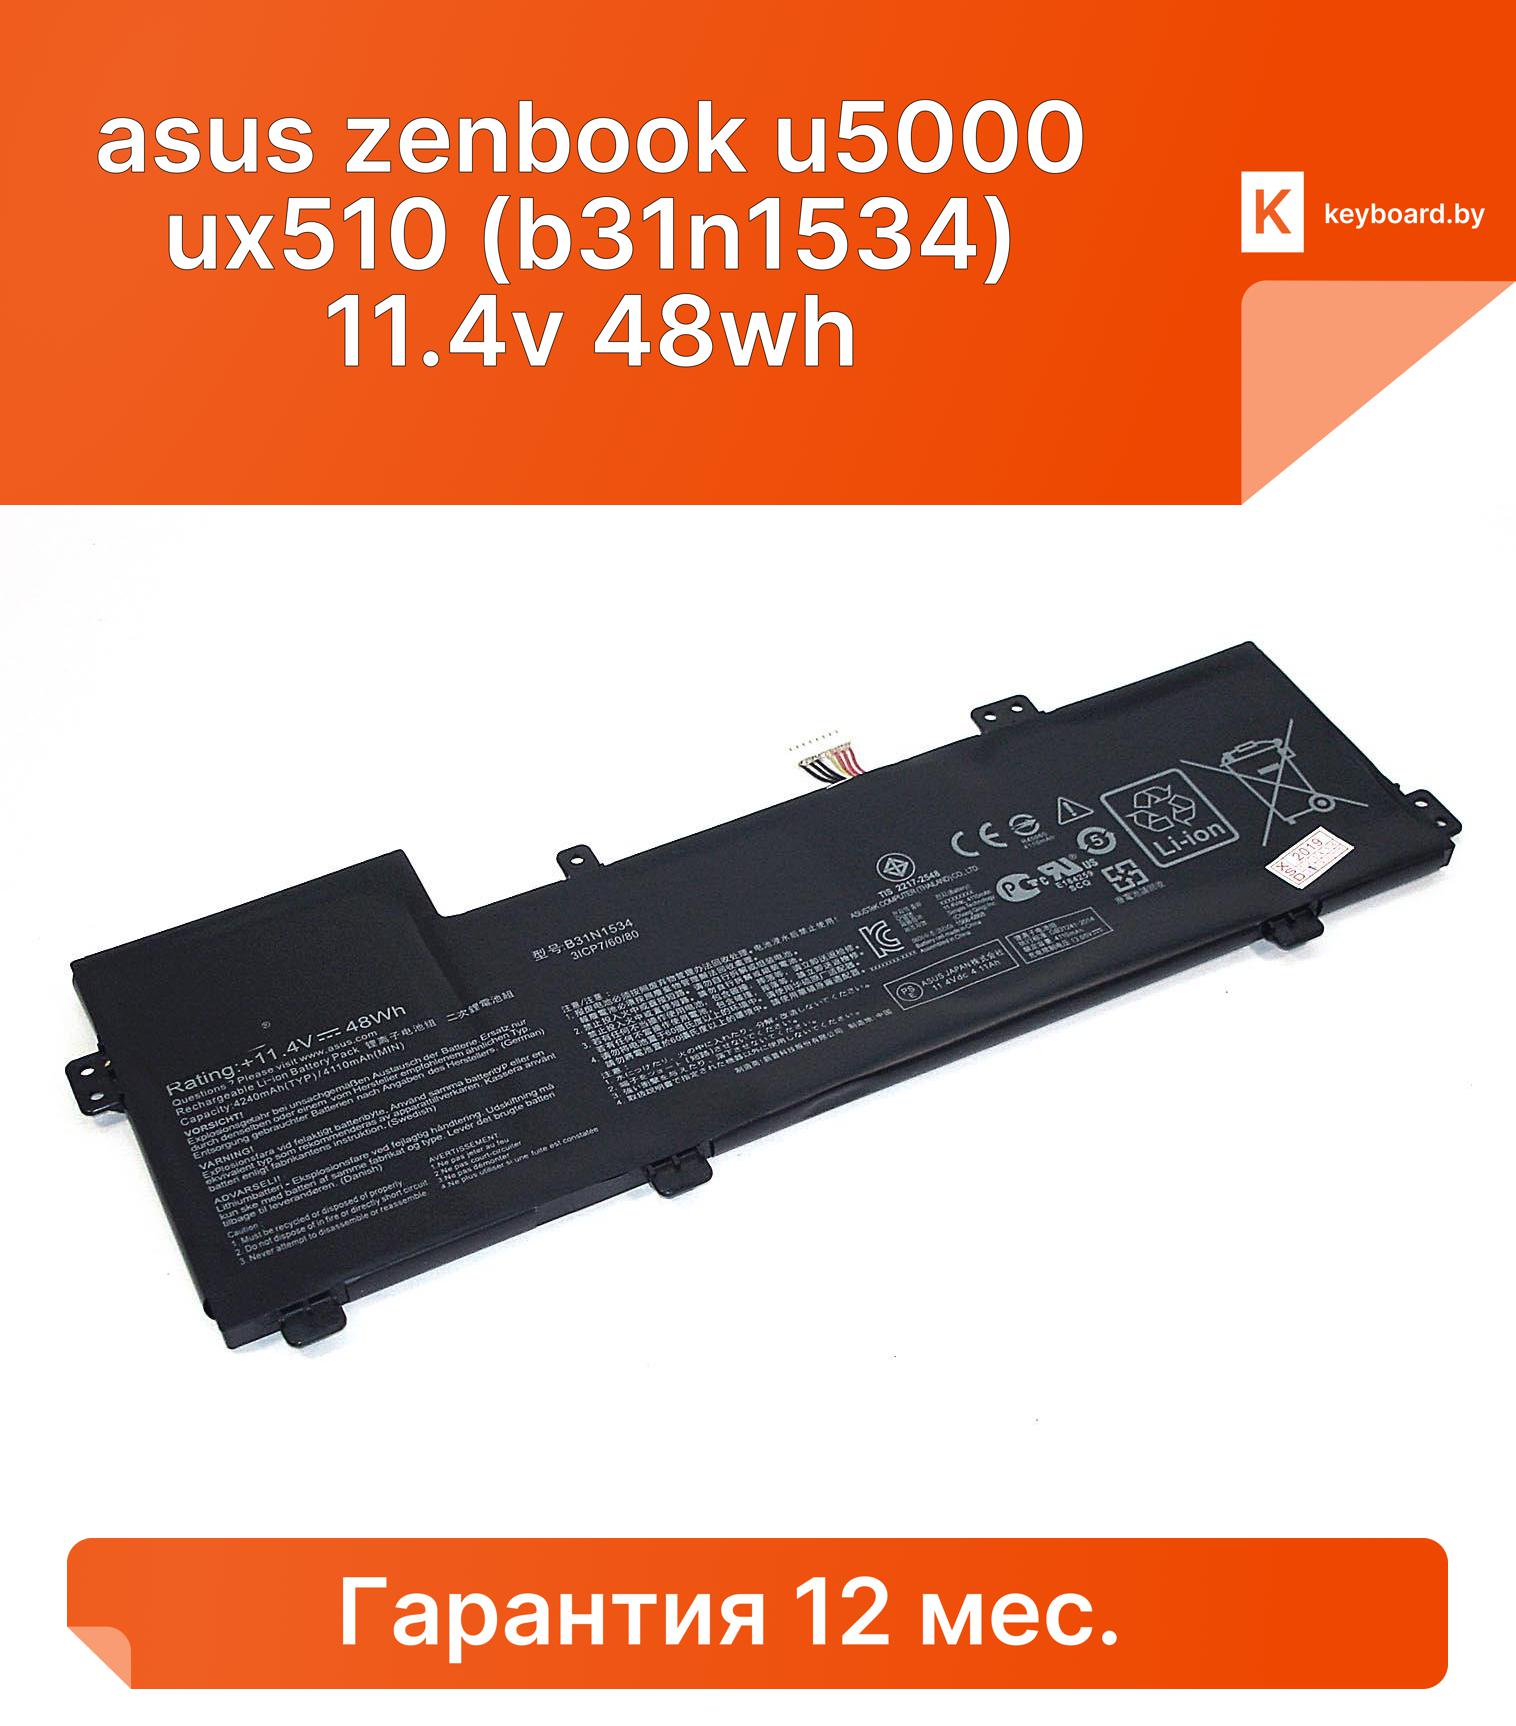 Аккумуляторная батарея для ноутбука asus zenbook u5000 ux510 (b31n1534) 11.4v 48wh